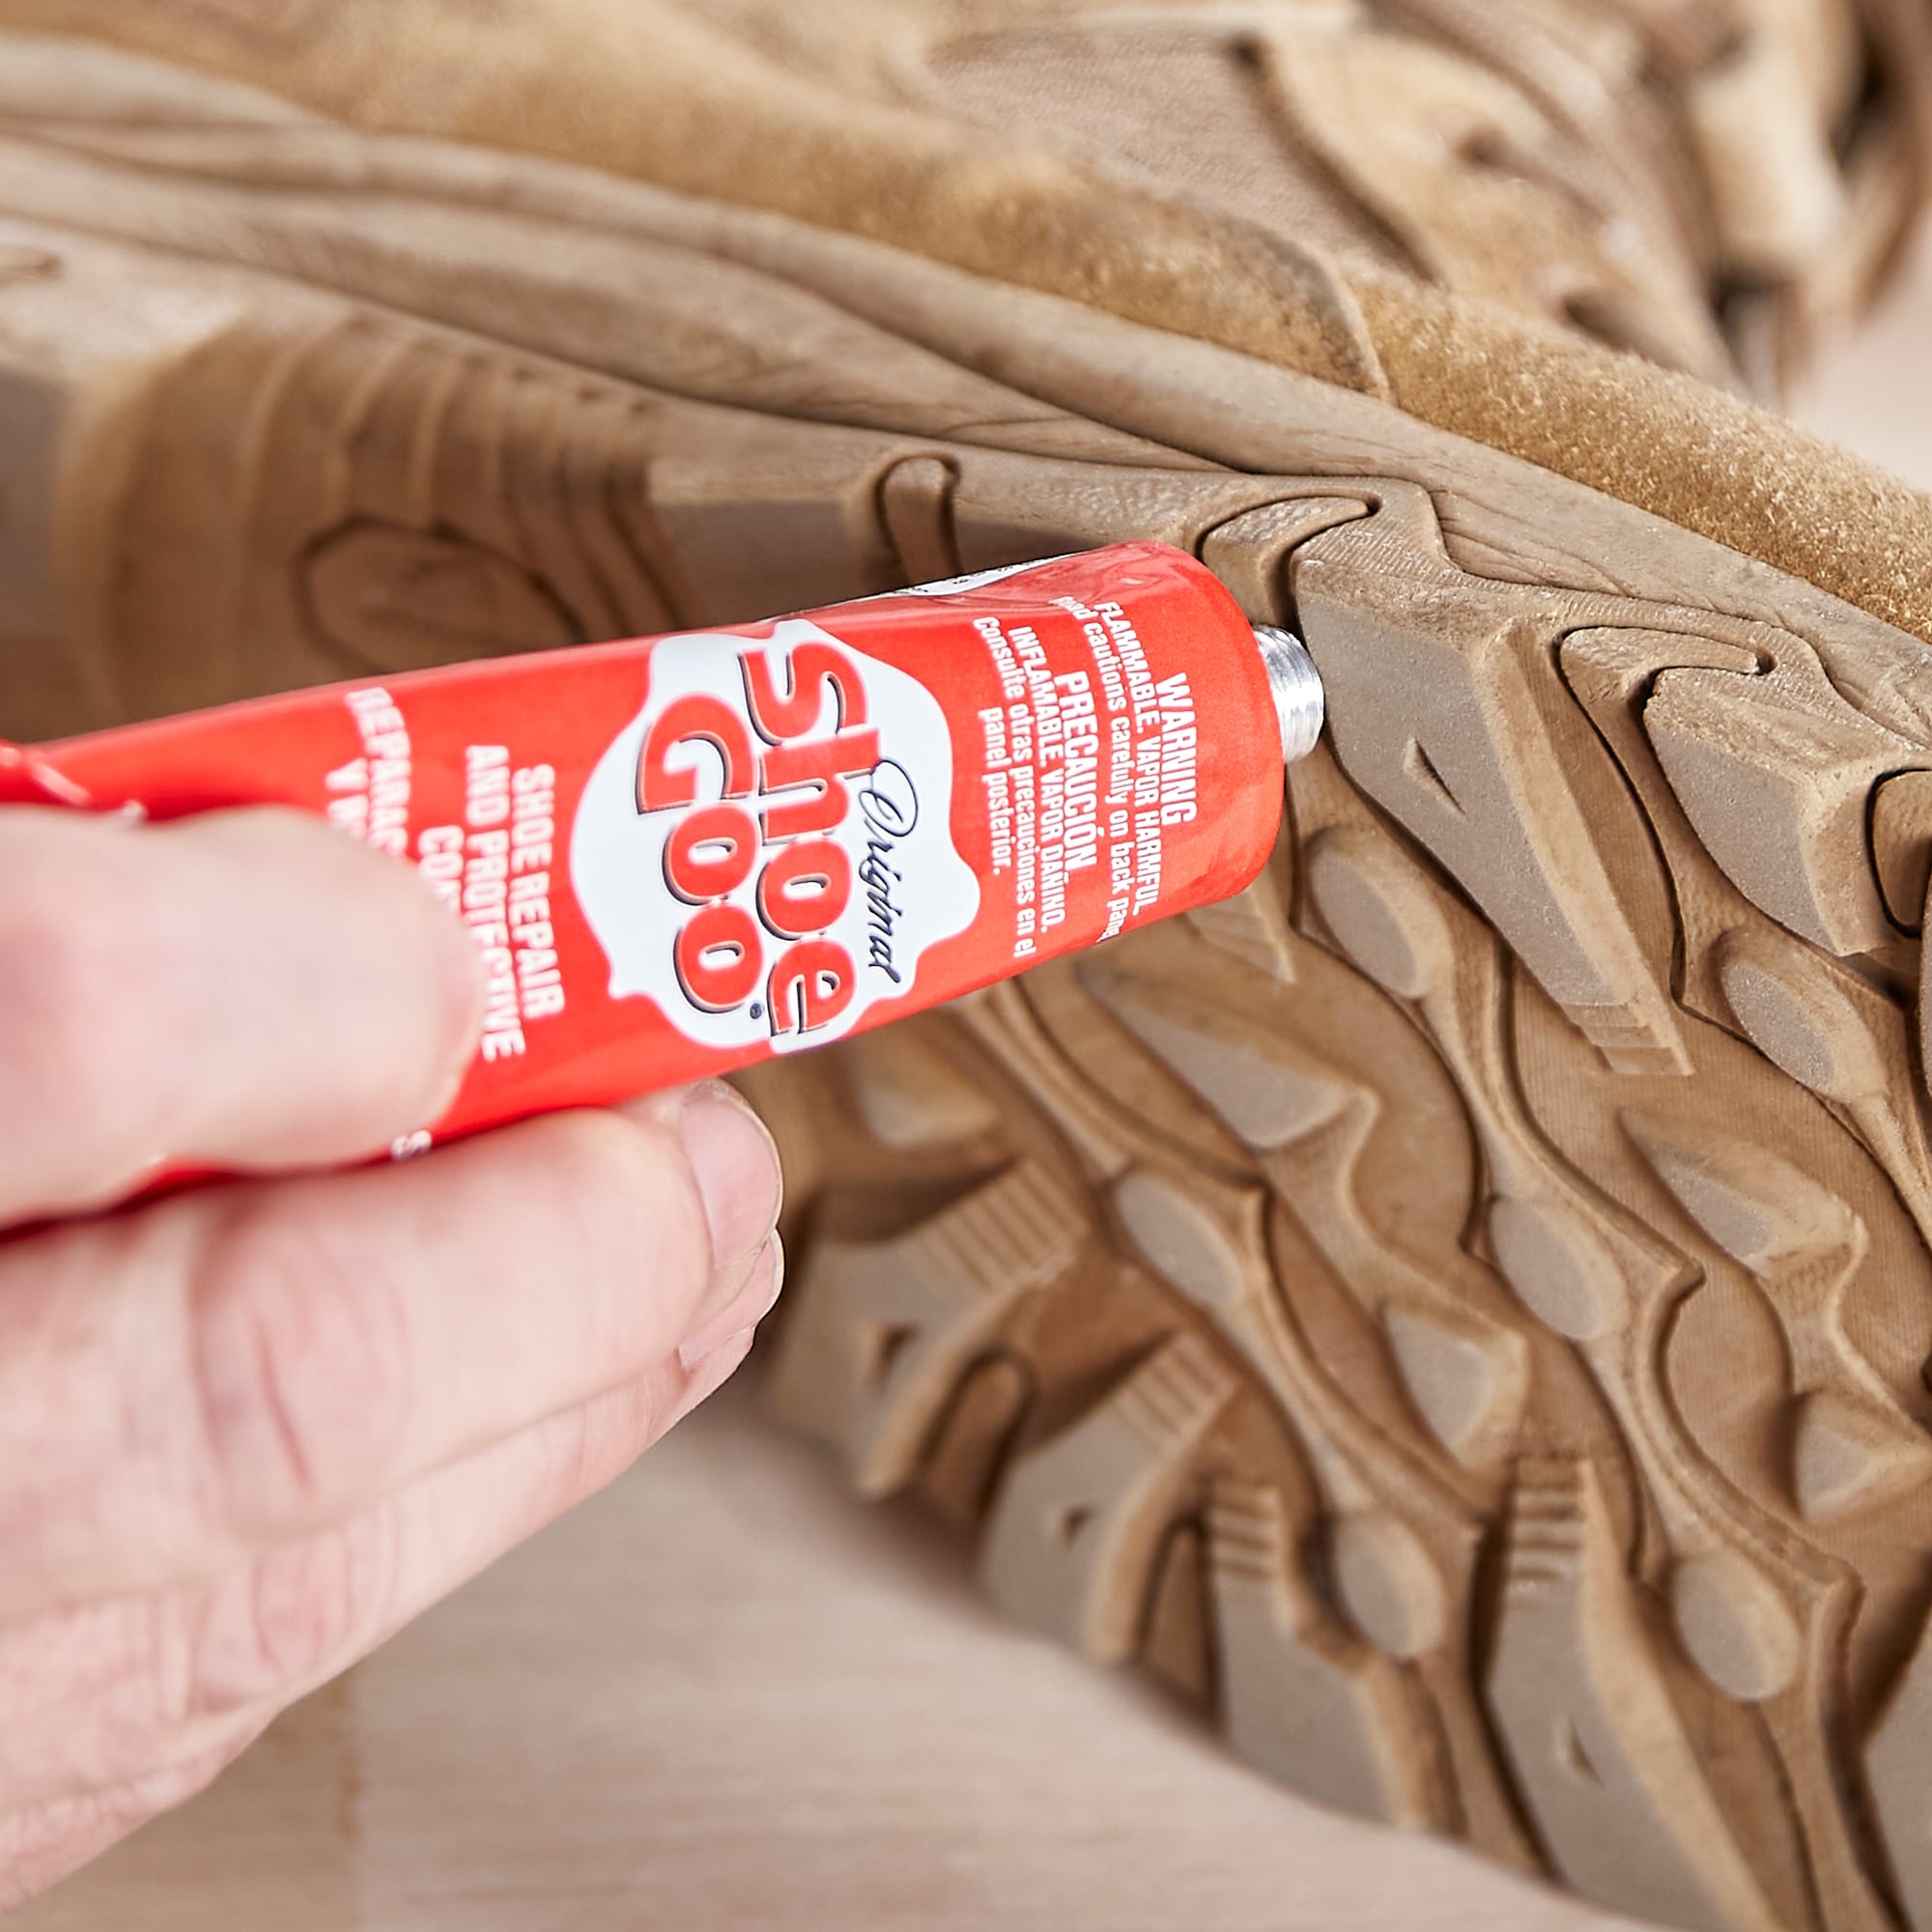 Shoe Goo Adhesive Clear Eclectic Shoe Repair - 3.7 fl oz